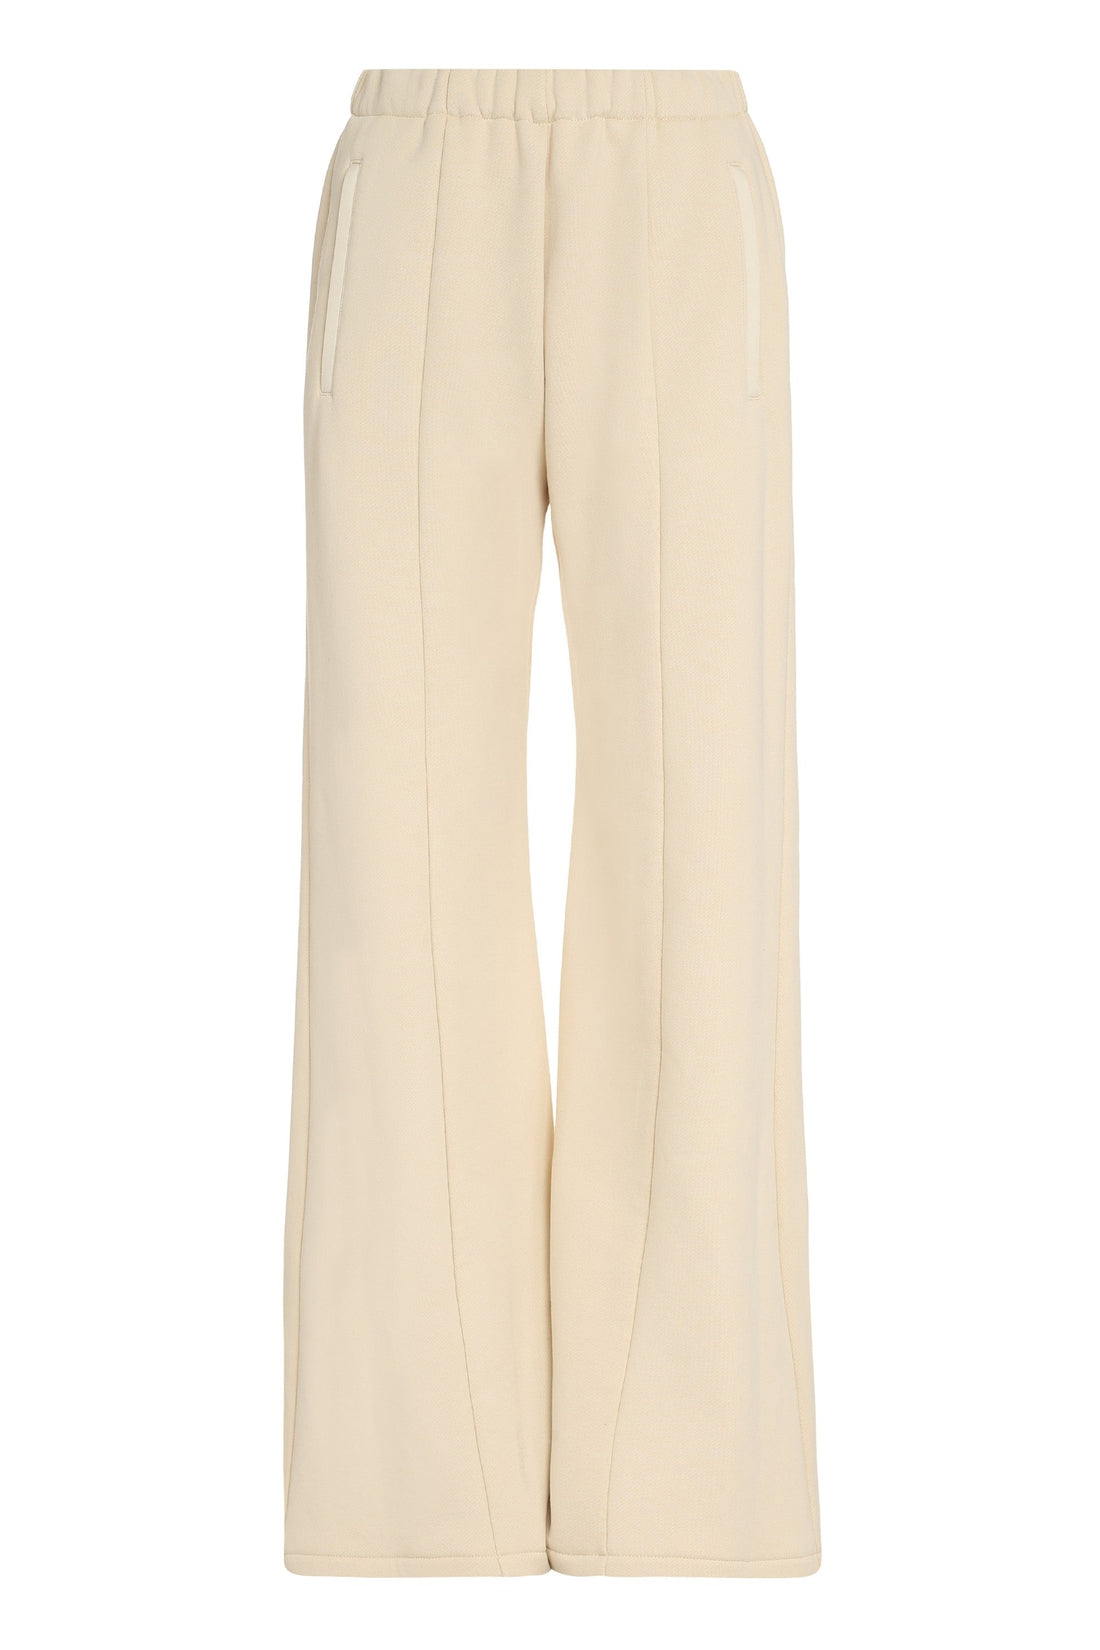 AMIRI-OUTLET-SALE-Cotton flared trousers-ARCHIVIST